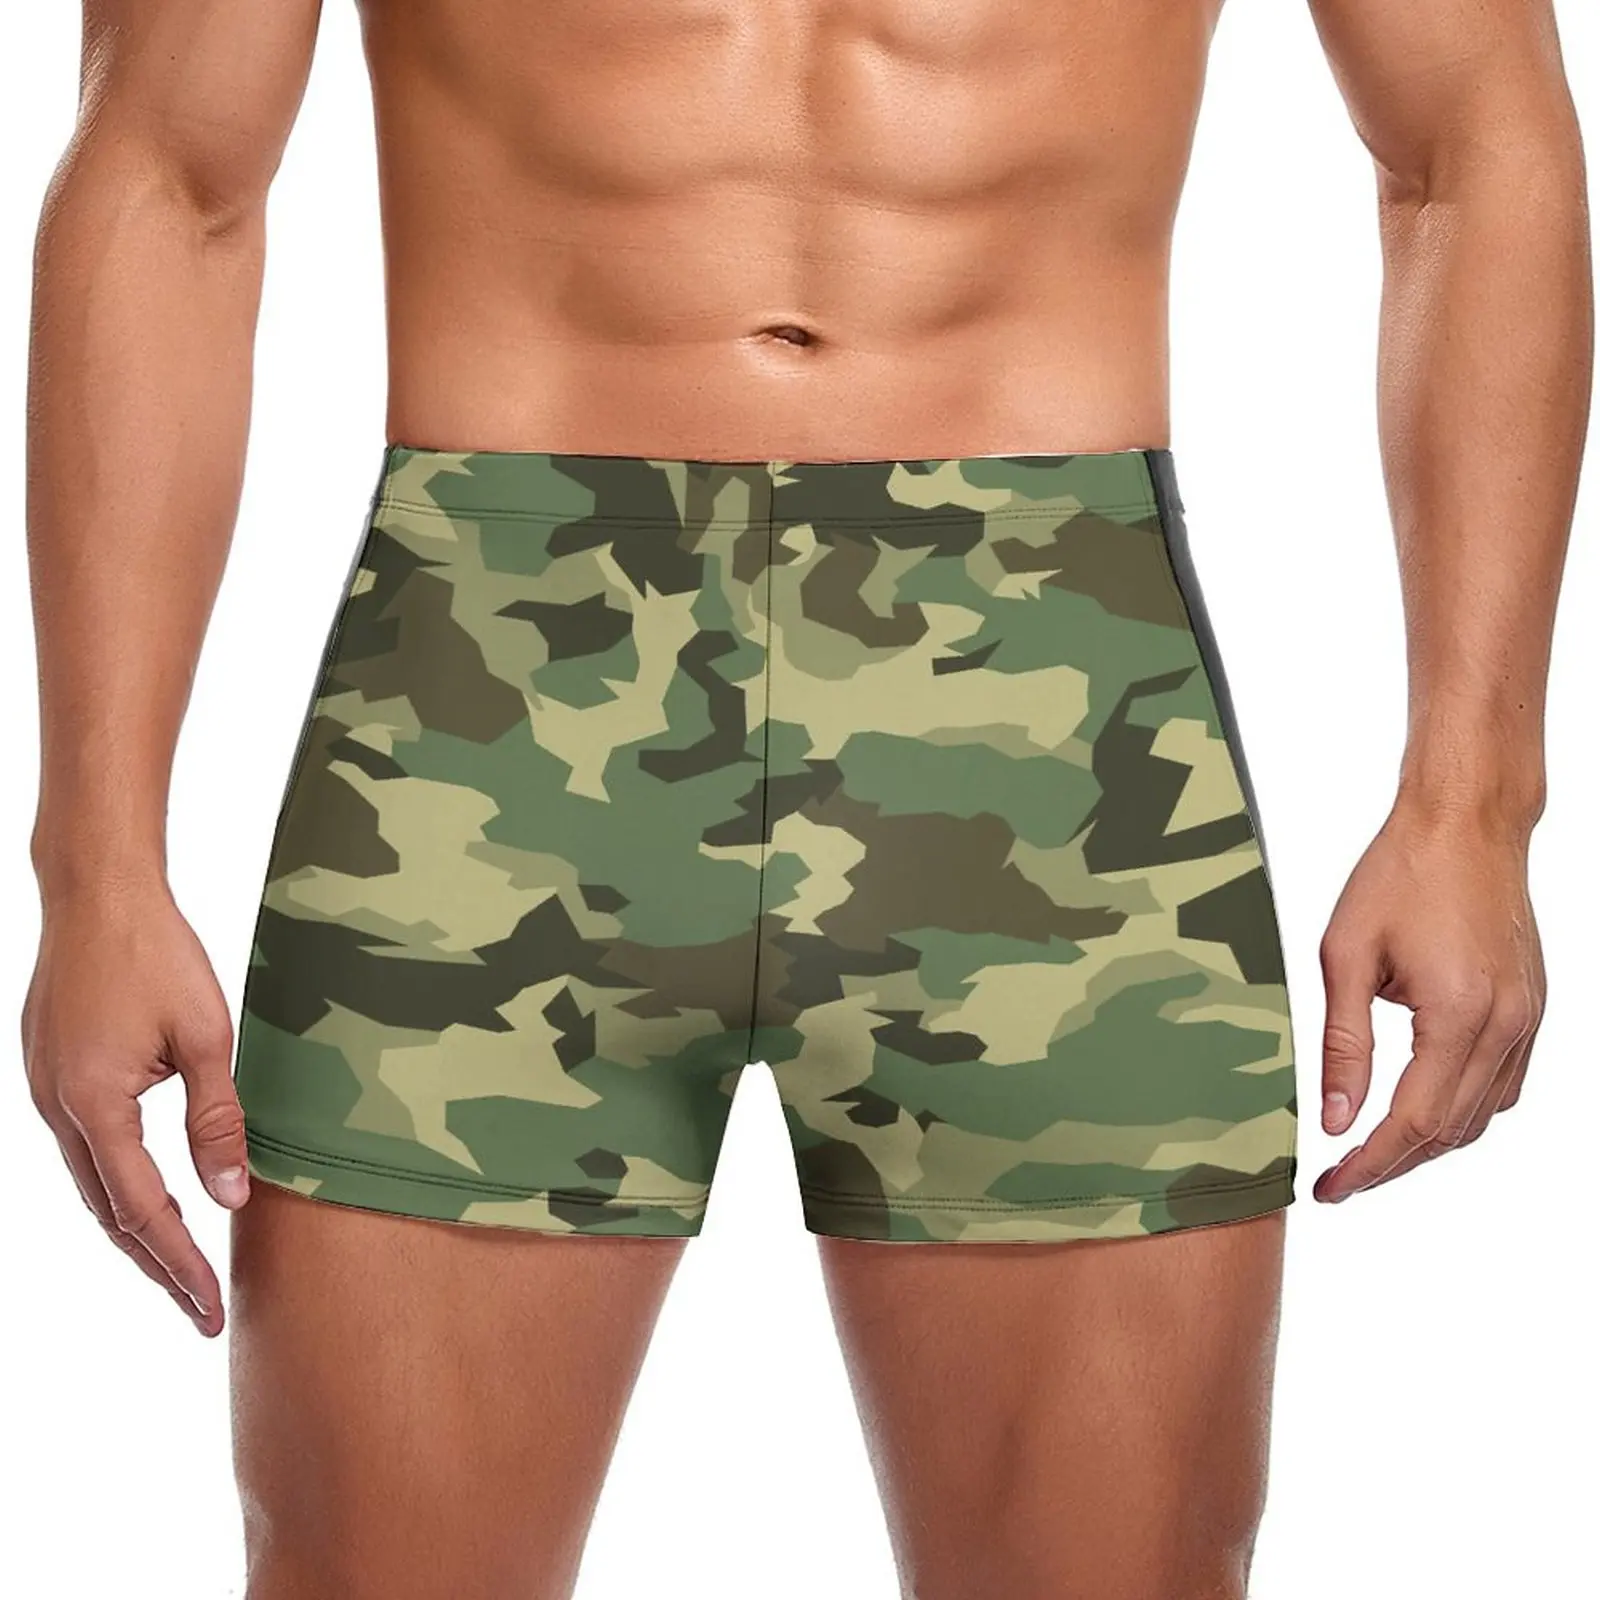 

Classic Camo Swimming Trunks Camouflage Military Design Army Trending Elastic Swim Boxers Beach Push Up Men Swimsuit